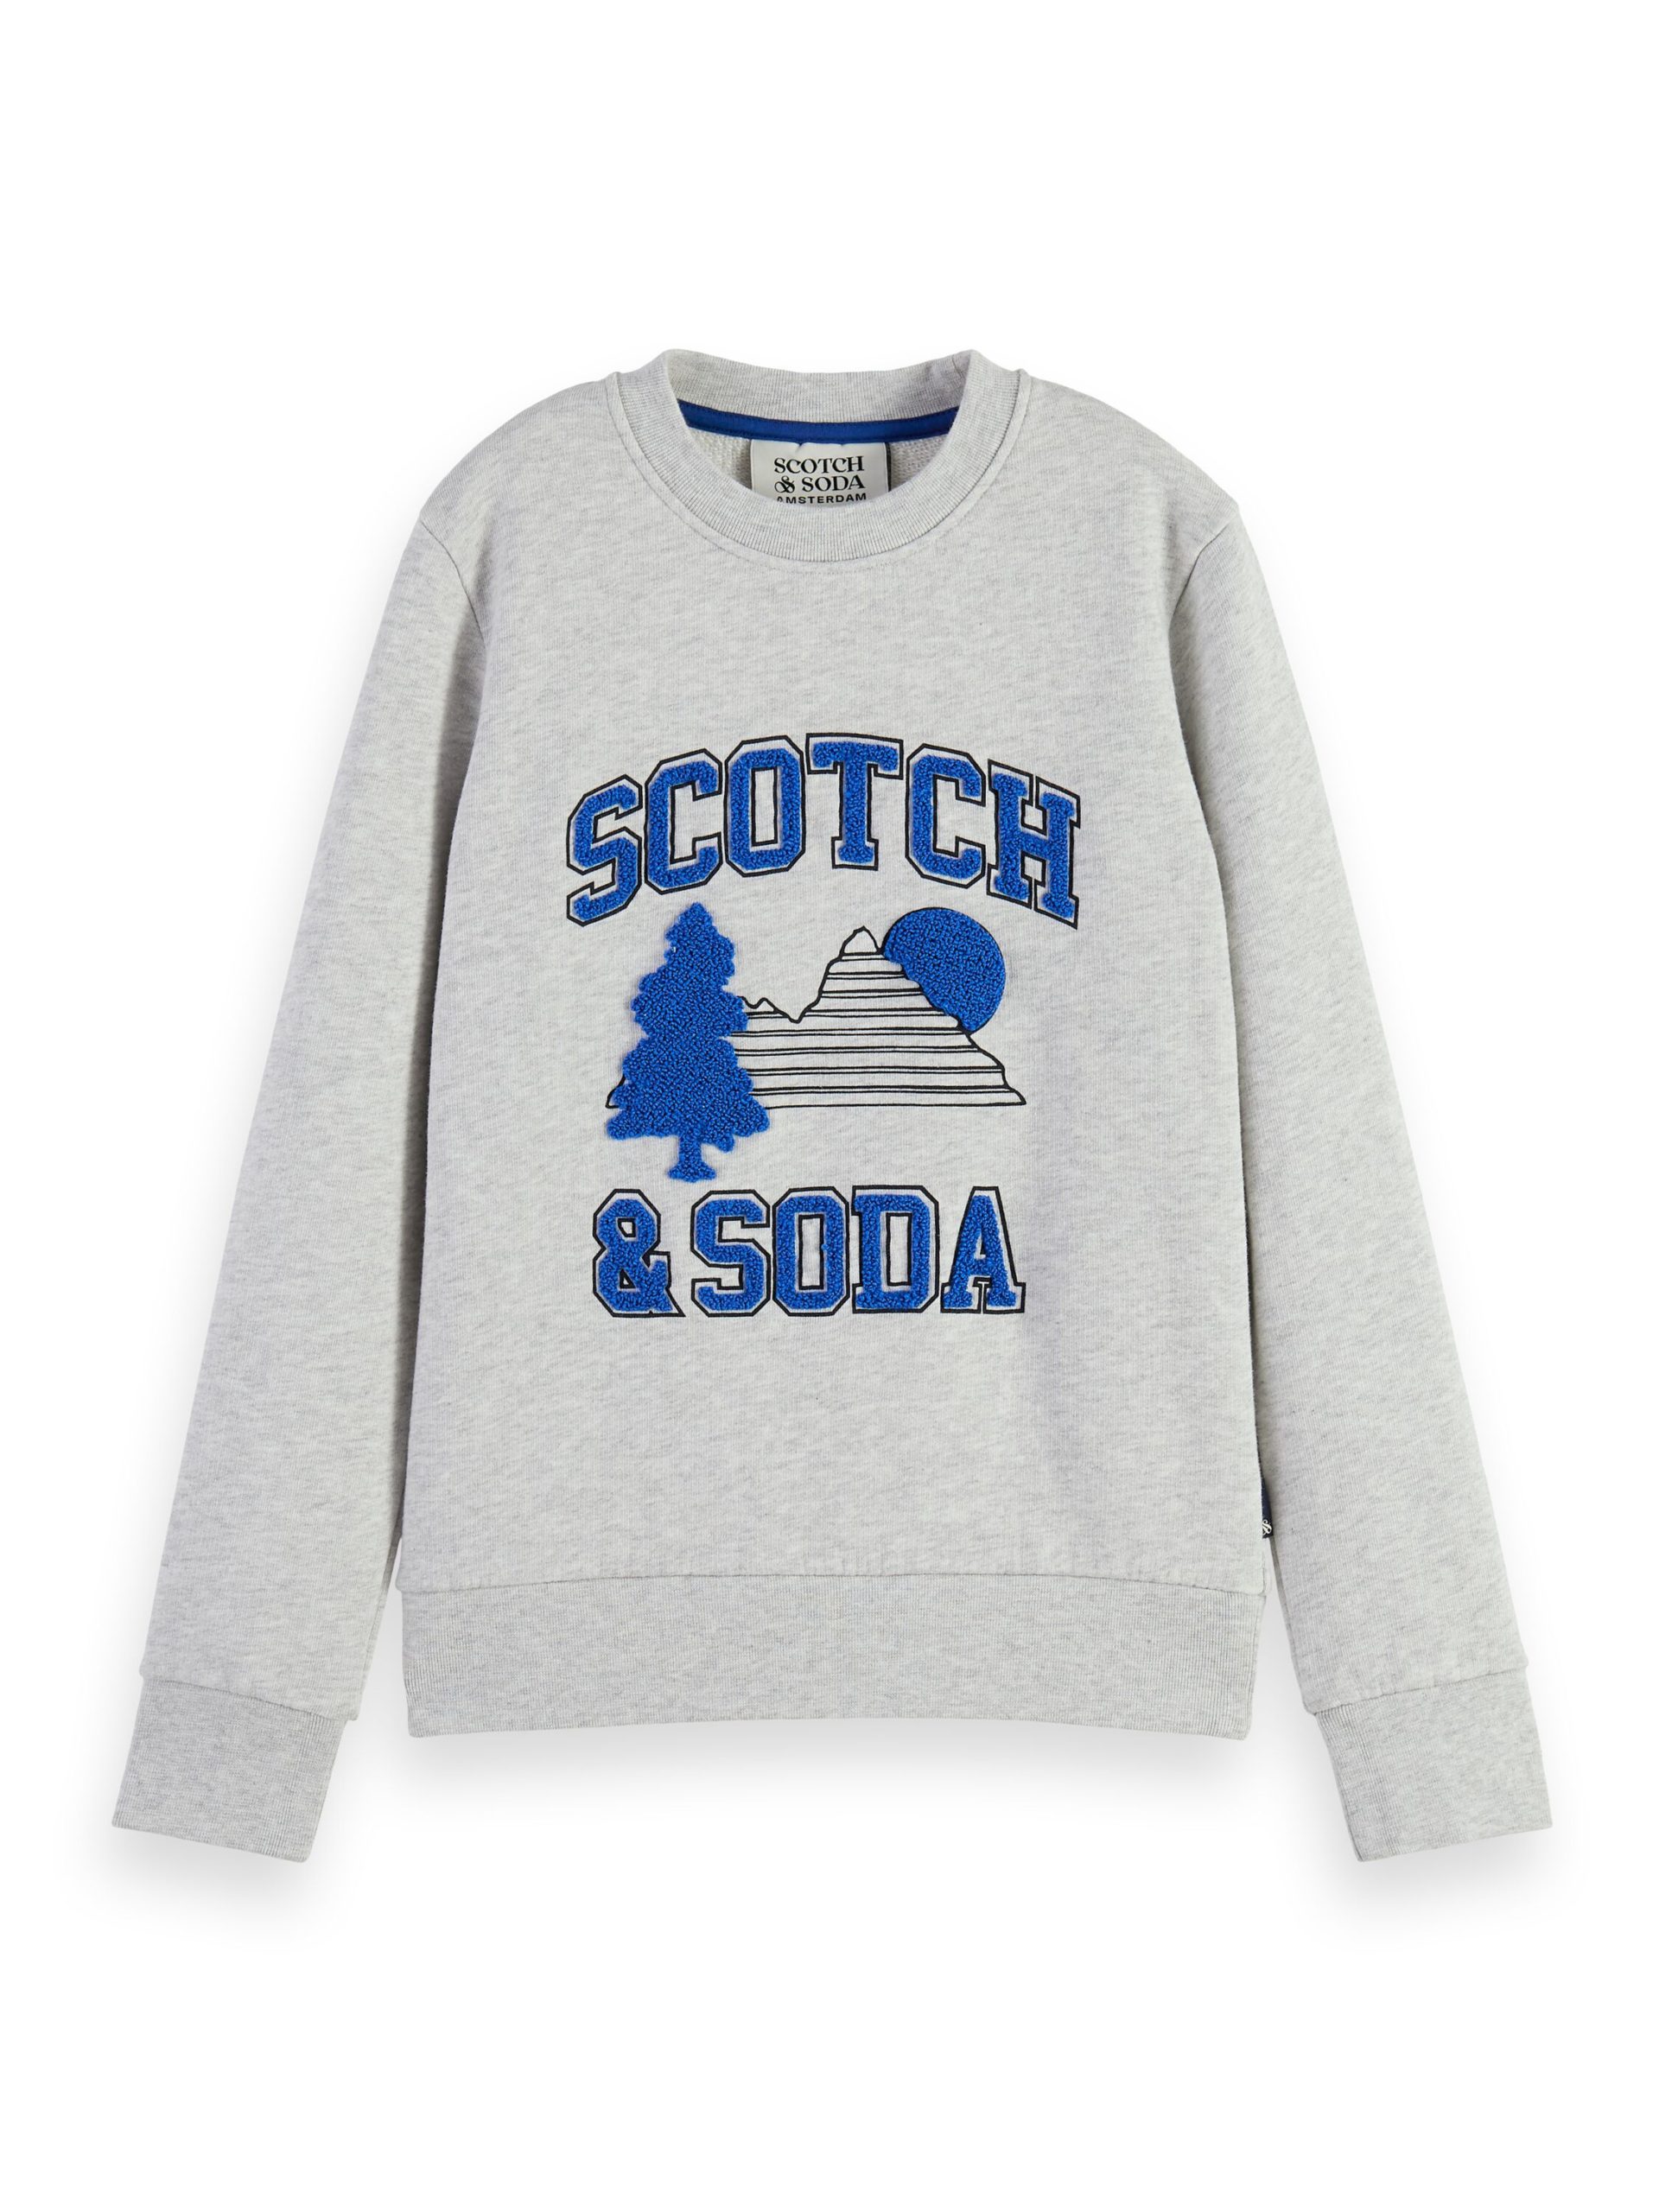 Scotch Shrunk Organic Cotton Towel Art Sweatshirt - BREEZYKIDZ